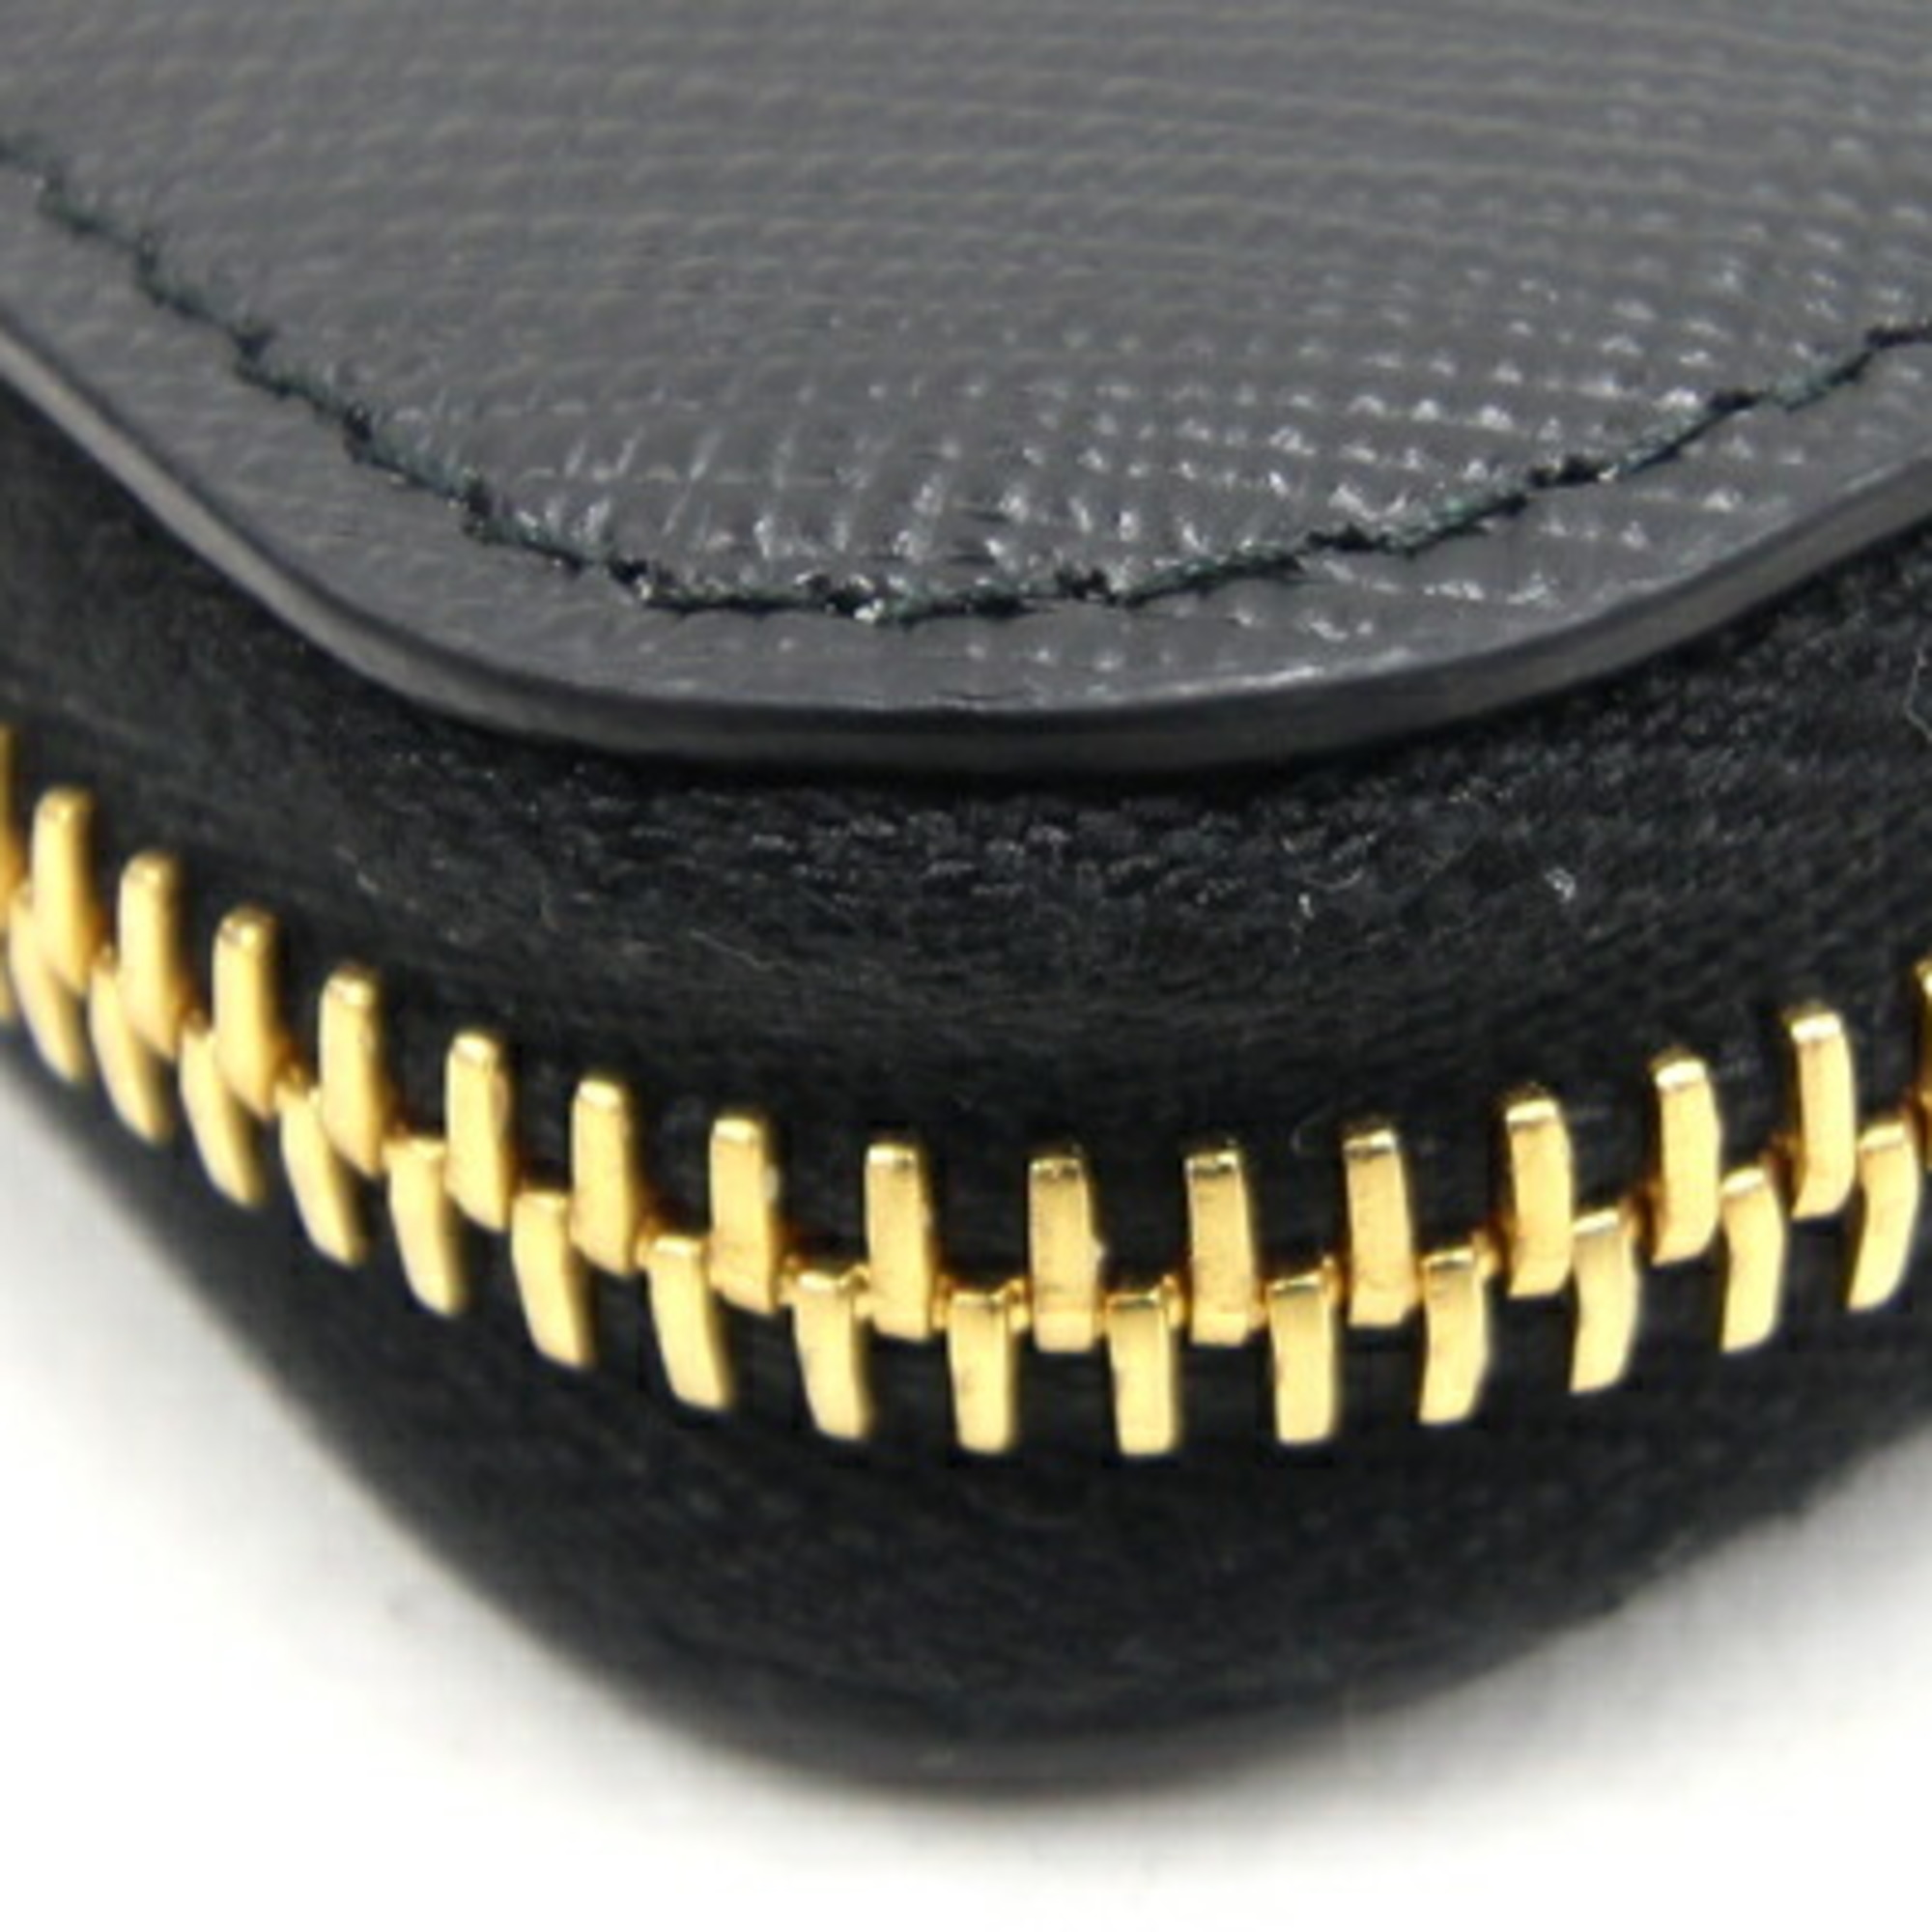 Prada Round Long Wallet 1ML506 Black Leather Saffiano Women's PRADA